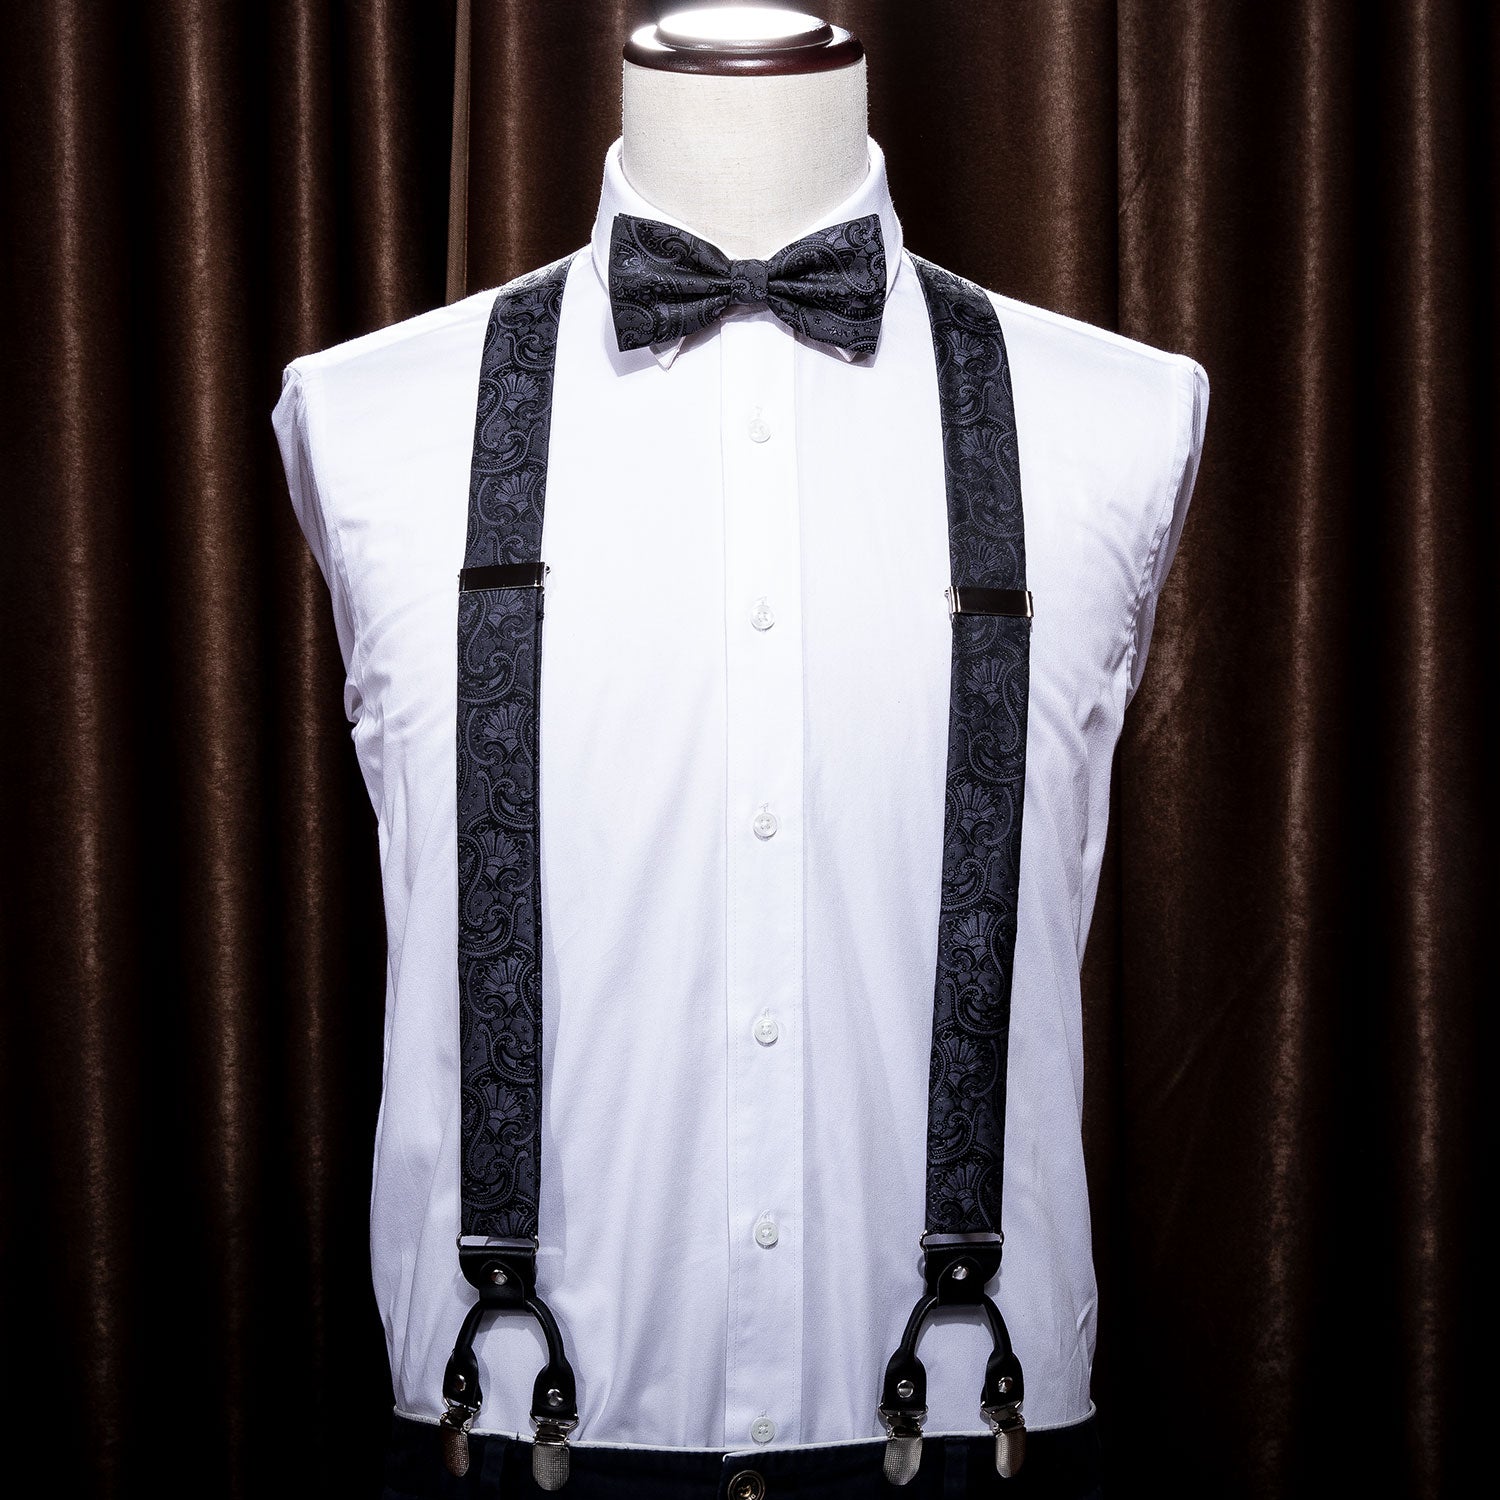 Barry.wang Black Tie Floral Y Back Adjustable Bow Tie Suspenders Set